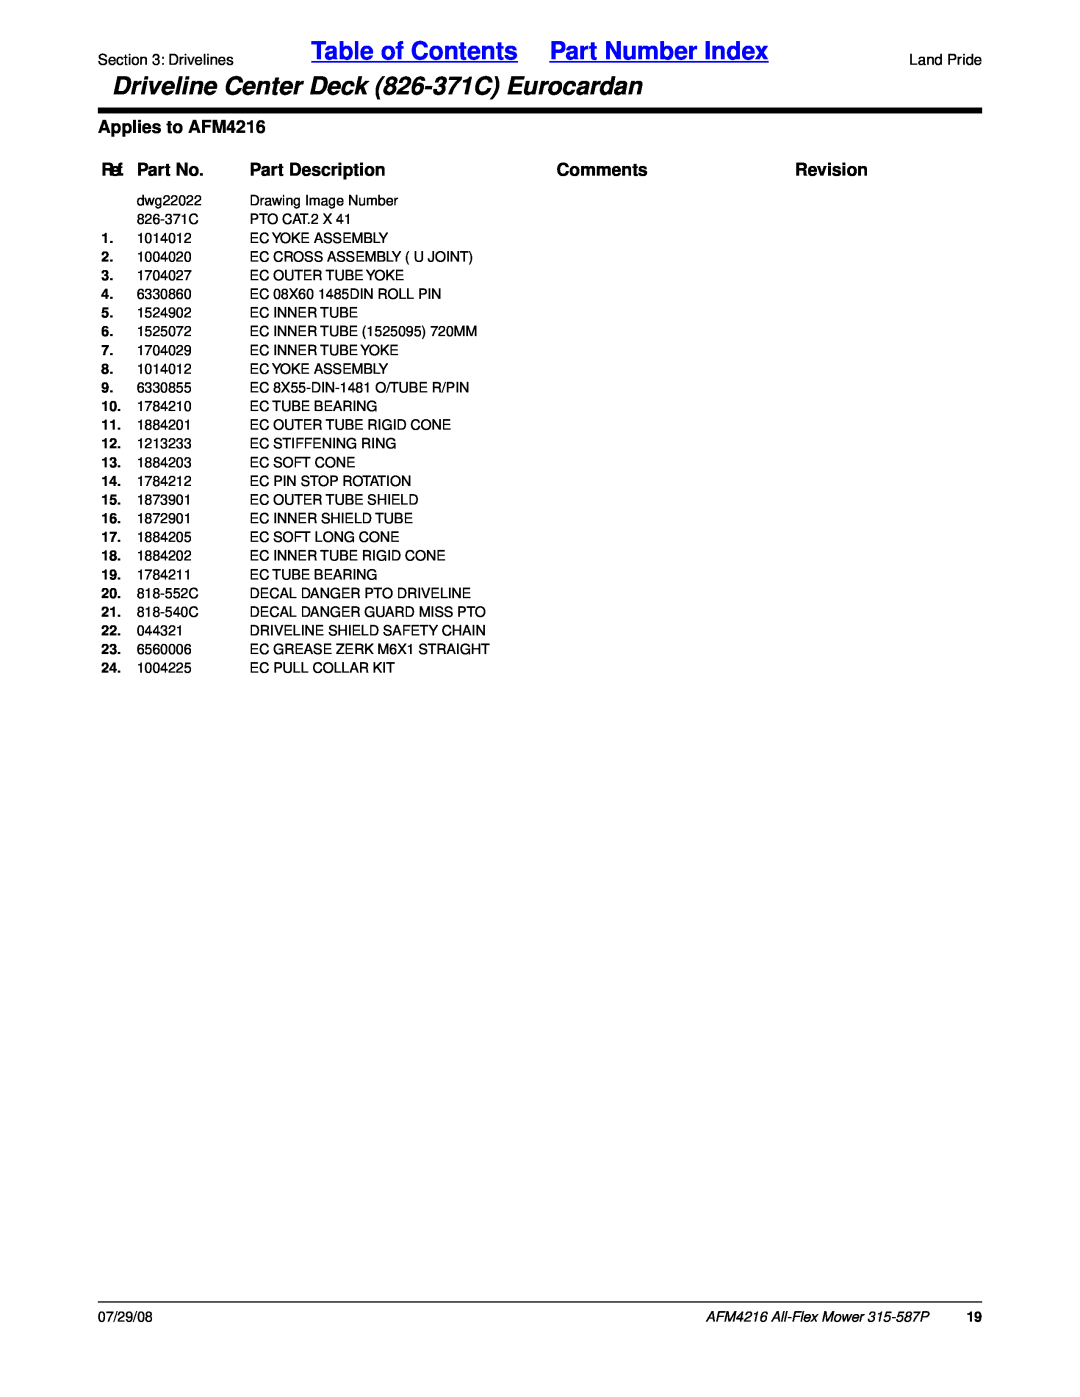 Land Pride Table of Contents Part Number Index, Driveline Center Deck 826-371CEurocardan, Applies to AFM4216, Comments 